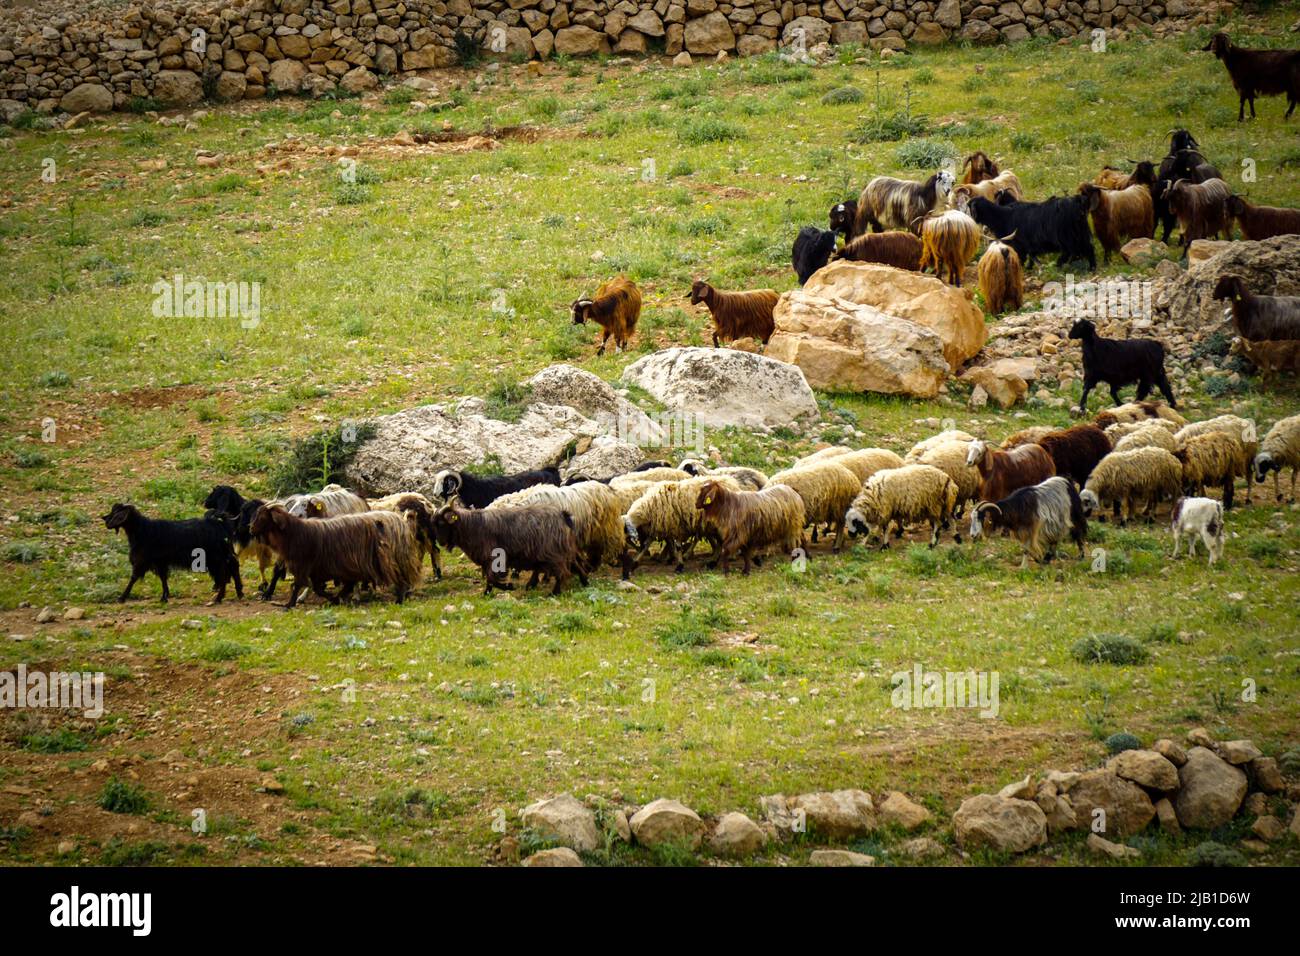 9 May 2022 Derik Mardin Turkey. Goat herd being herded by herder men on the field Stock Photo